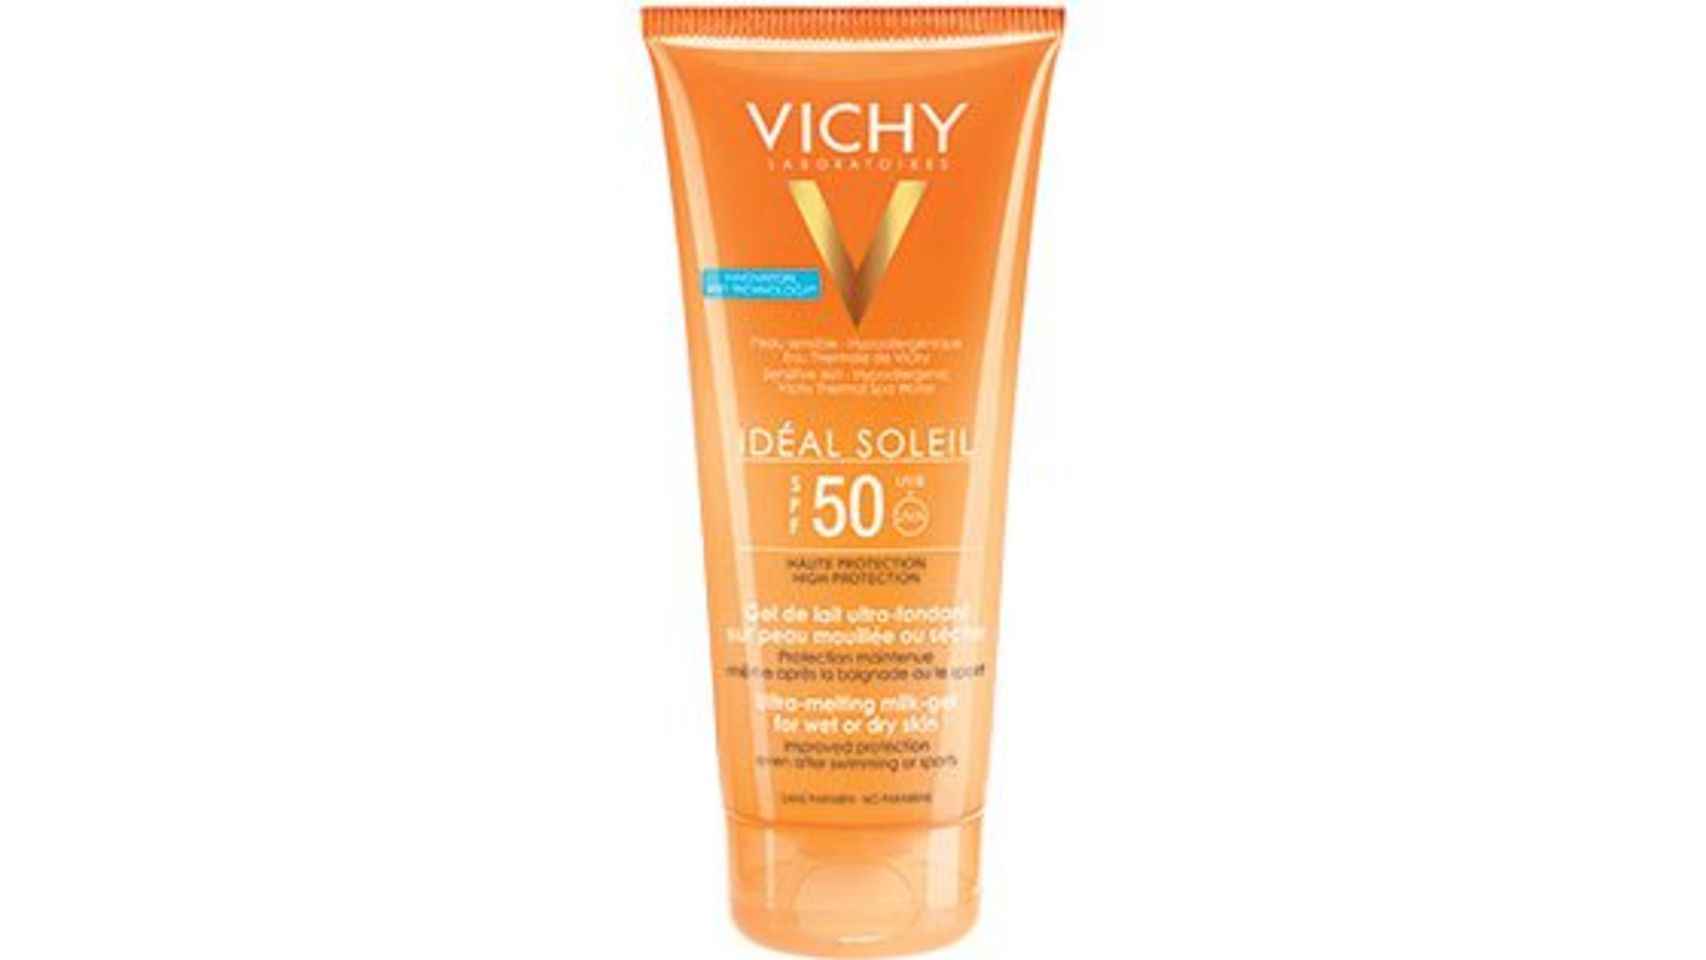 Gel ultra fundente SPF 50 para aplicar sobre piel seca o mojada de Vichy.